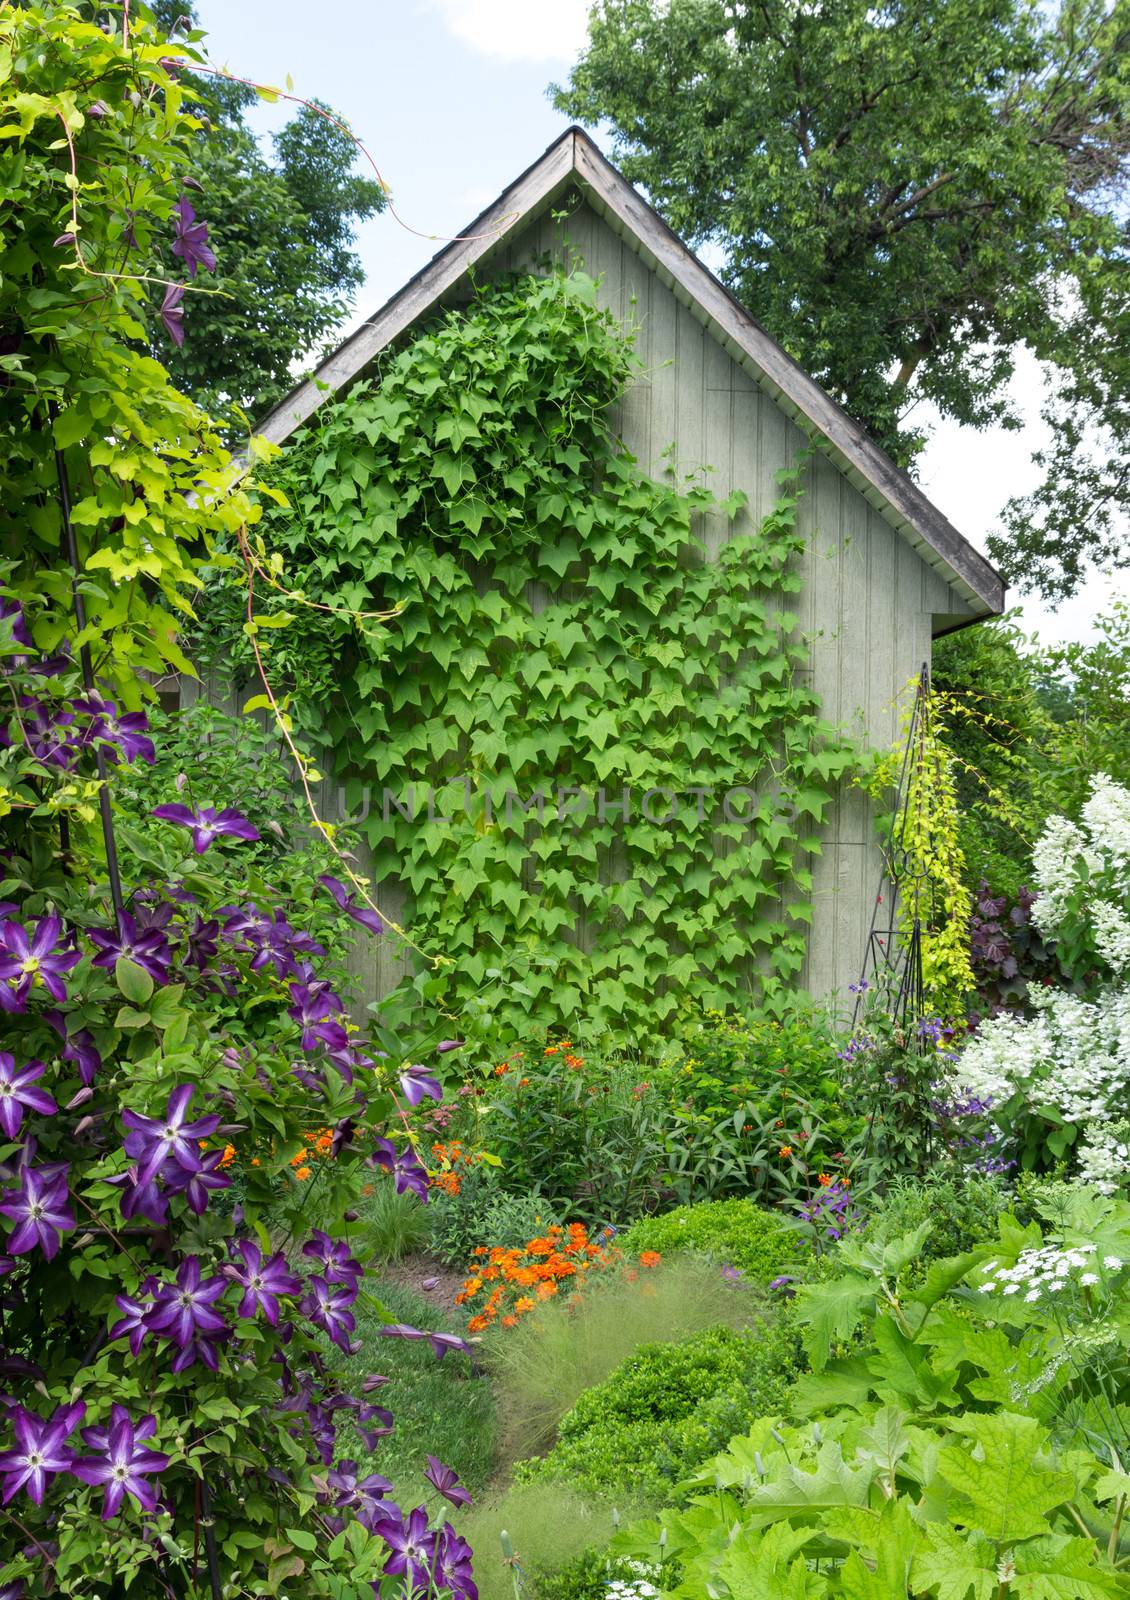 Little house in a flowering garden by anikasalsera